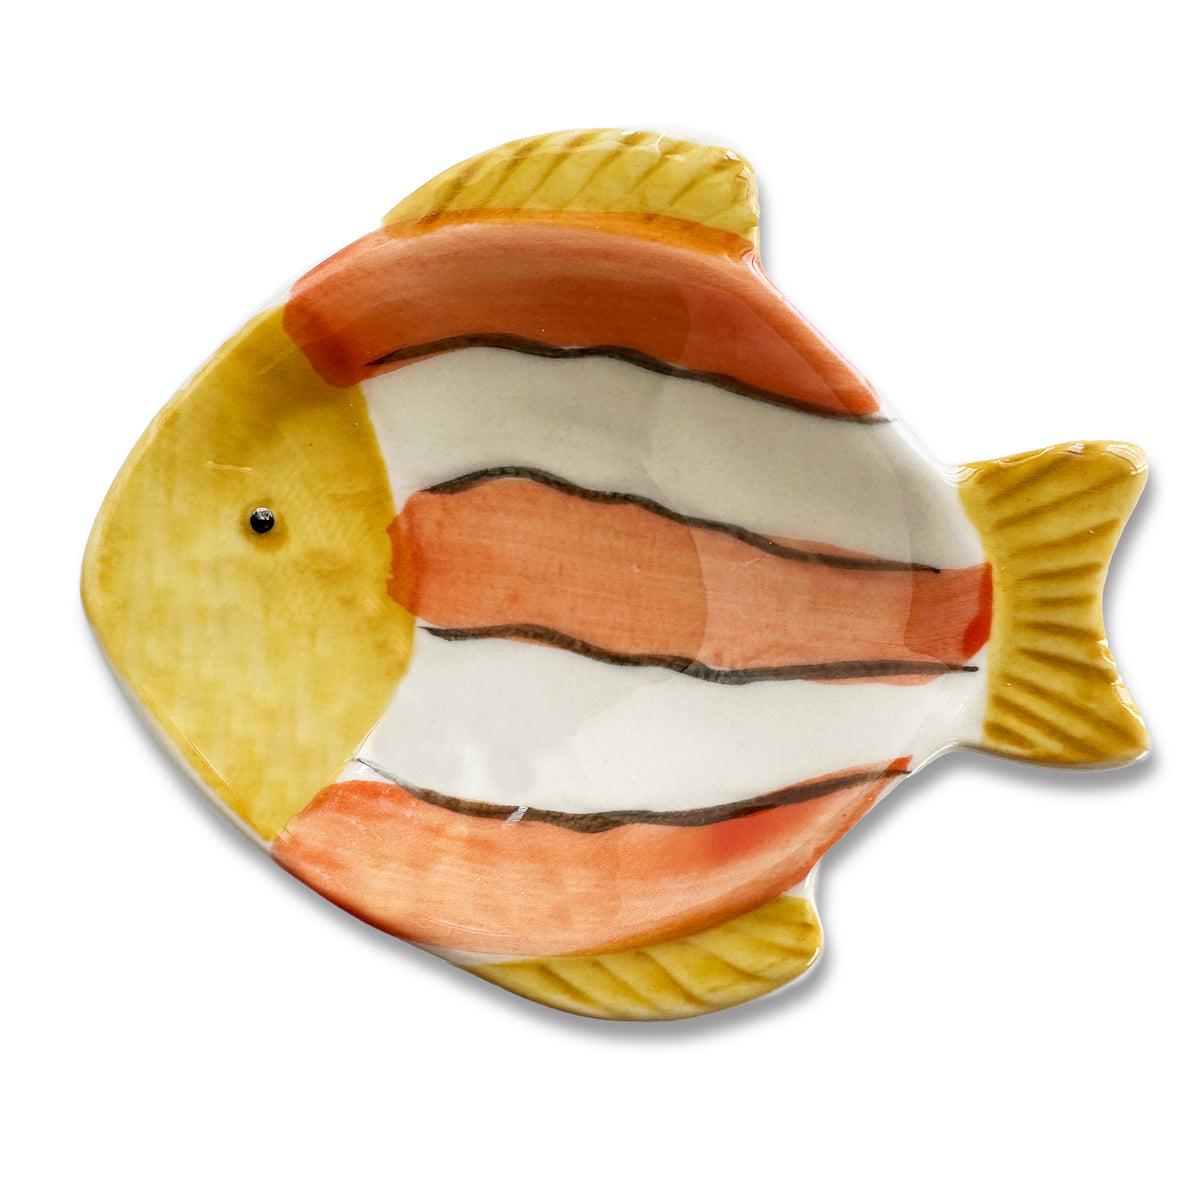 Mini Fish Plates - for Soy Sauce, Wasabi, or Any Small Garnish